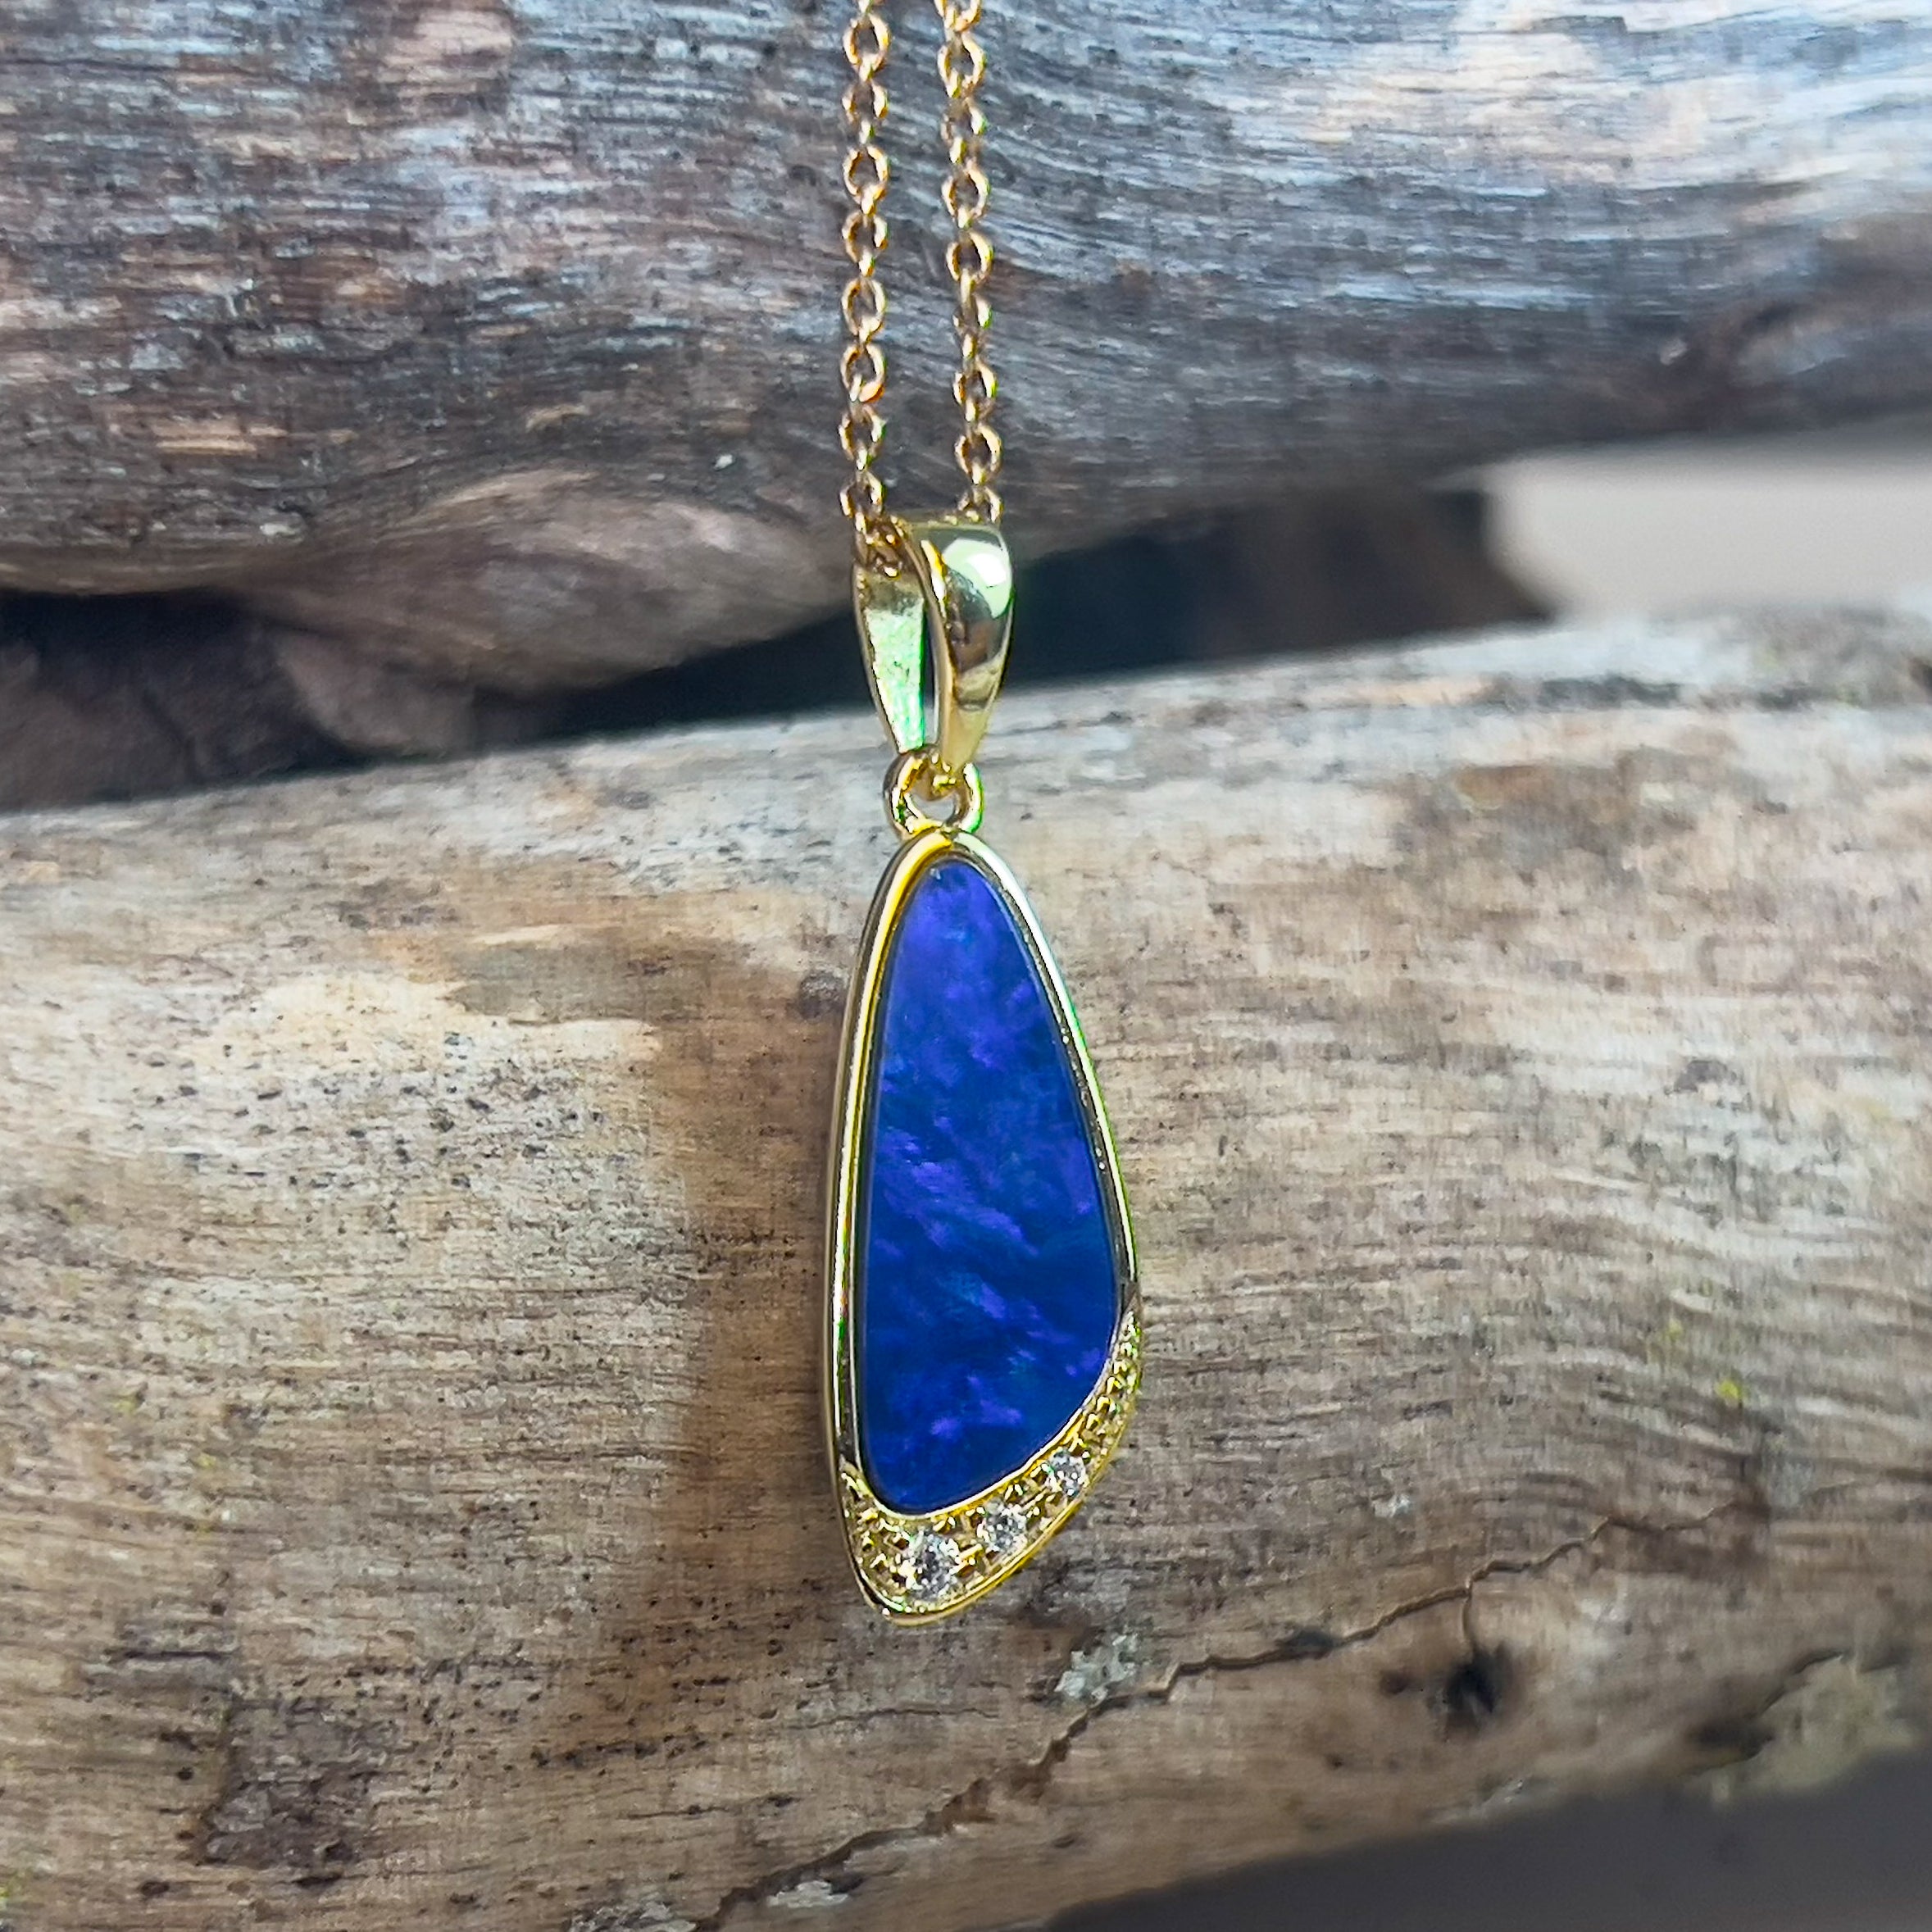 Gold plated silver Blue opal doublet pendant - Masterpiece Jewellery Opal & Gems Sydney Australia | Online Shop